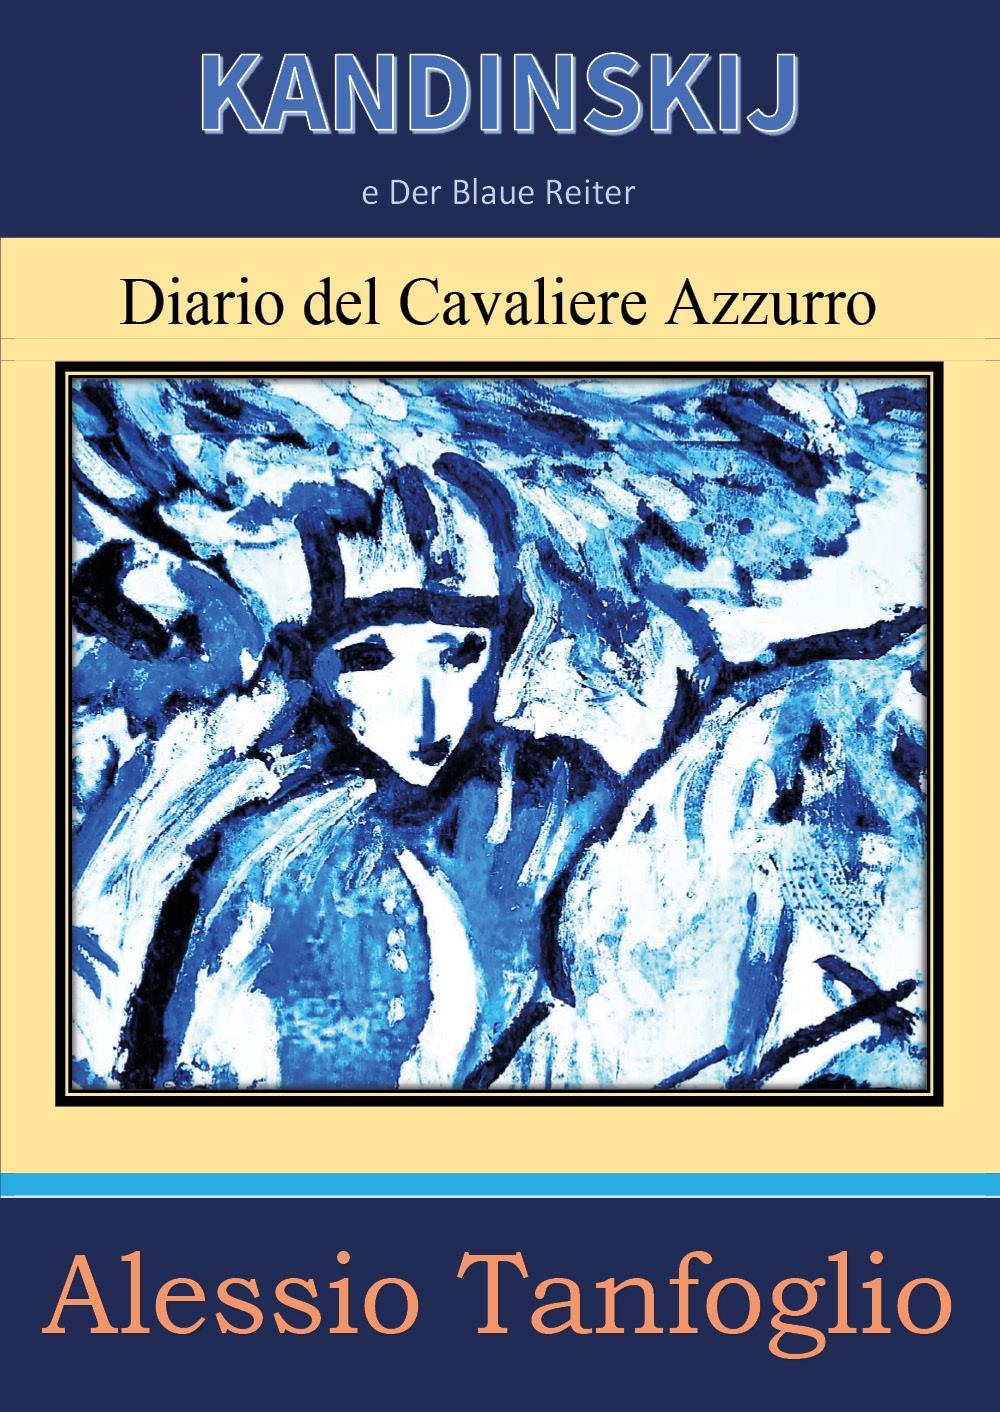 Kandinskij e Der Blaue Reiter. Diario del Cavaliere Azzurro